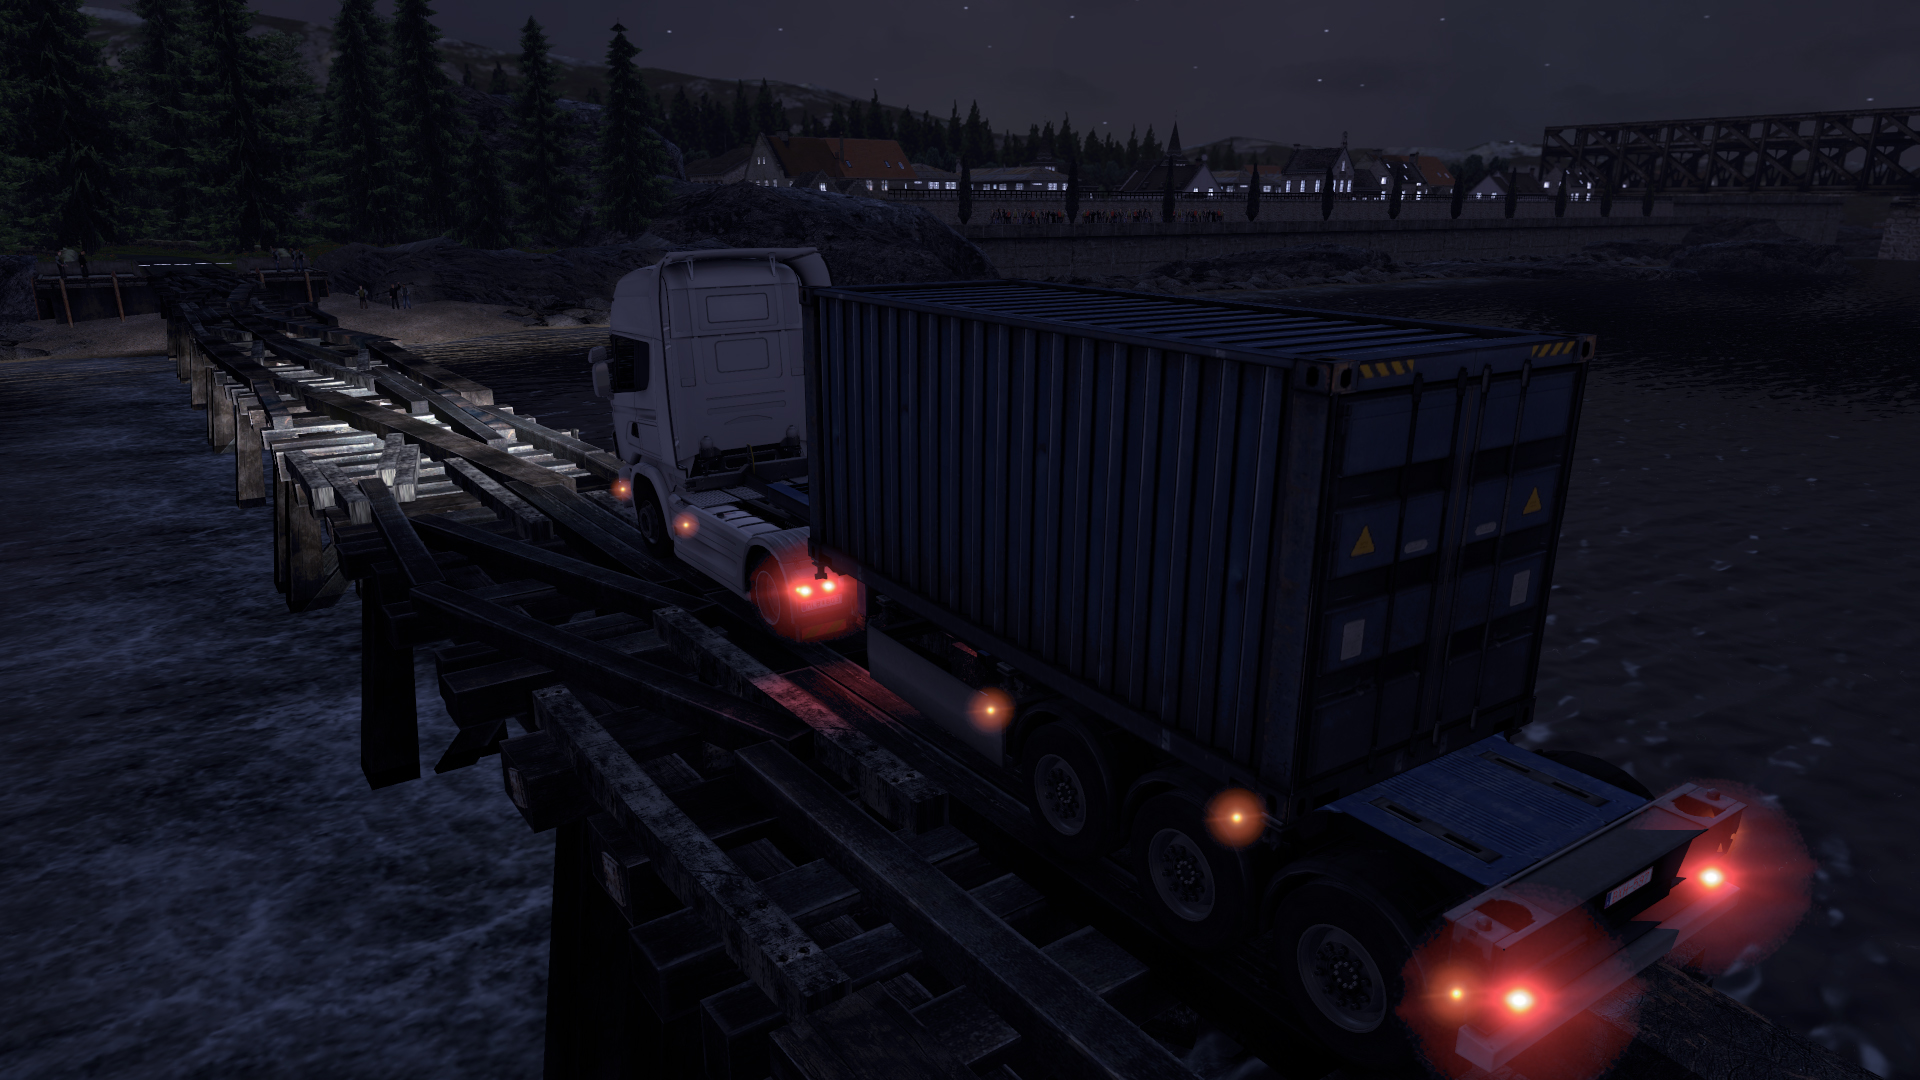 scania truck driving simulator free download full version